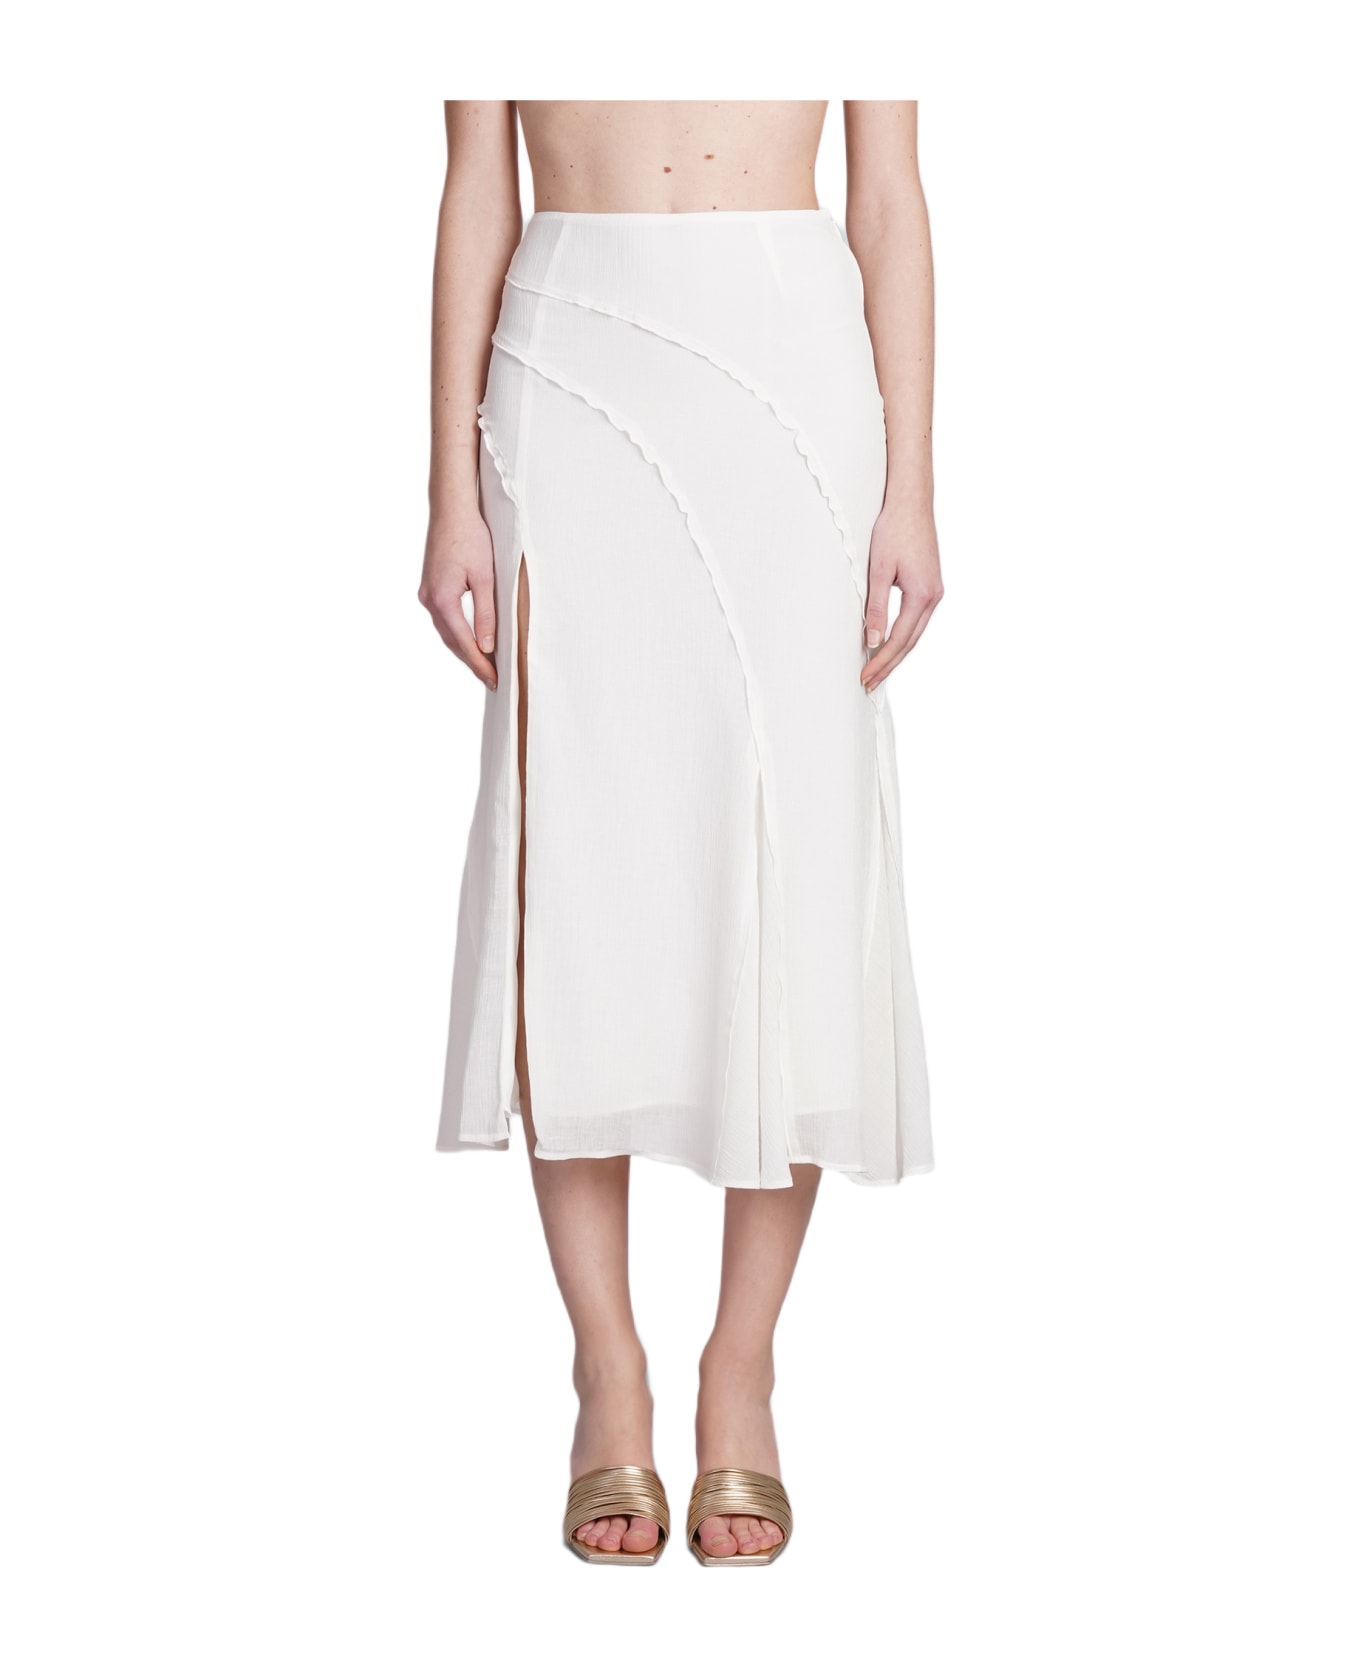 Cult Gaia Dallas Skirt In White Rayon - white